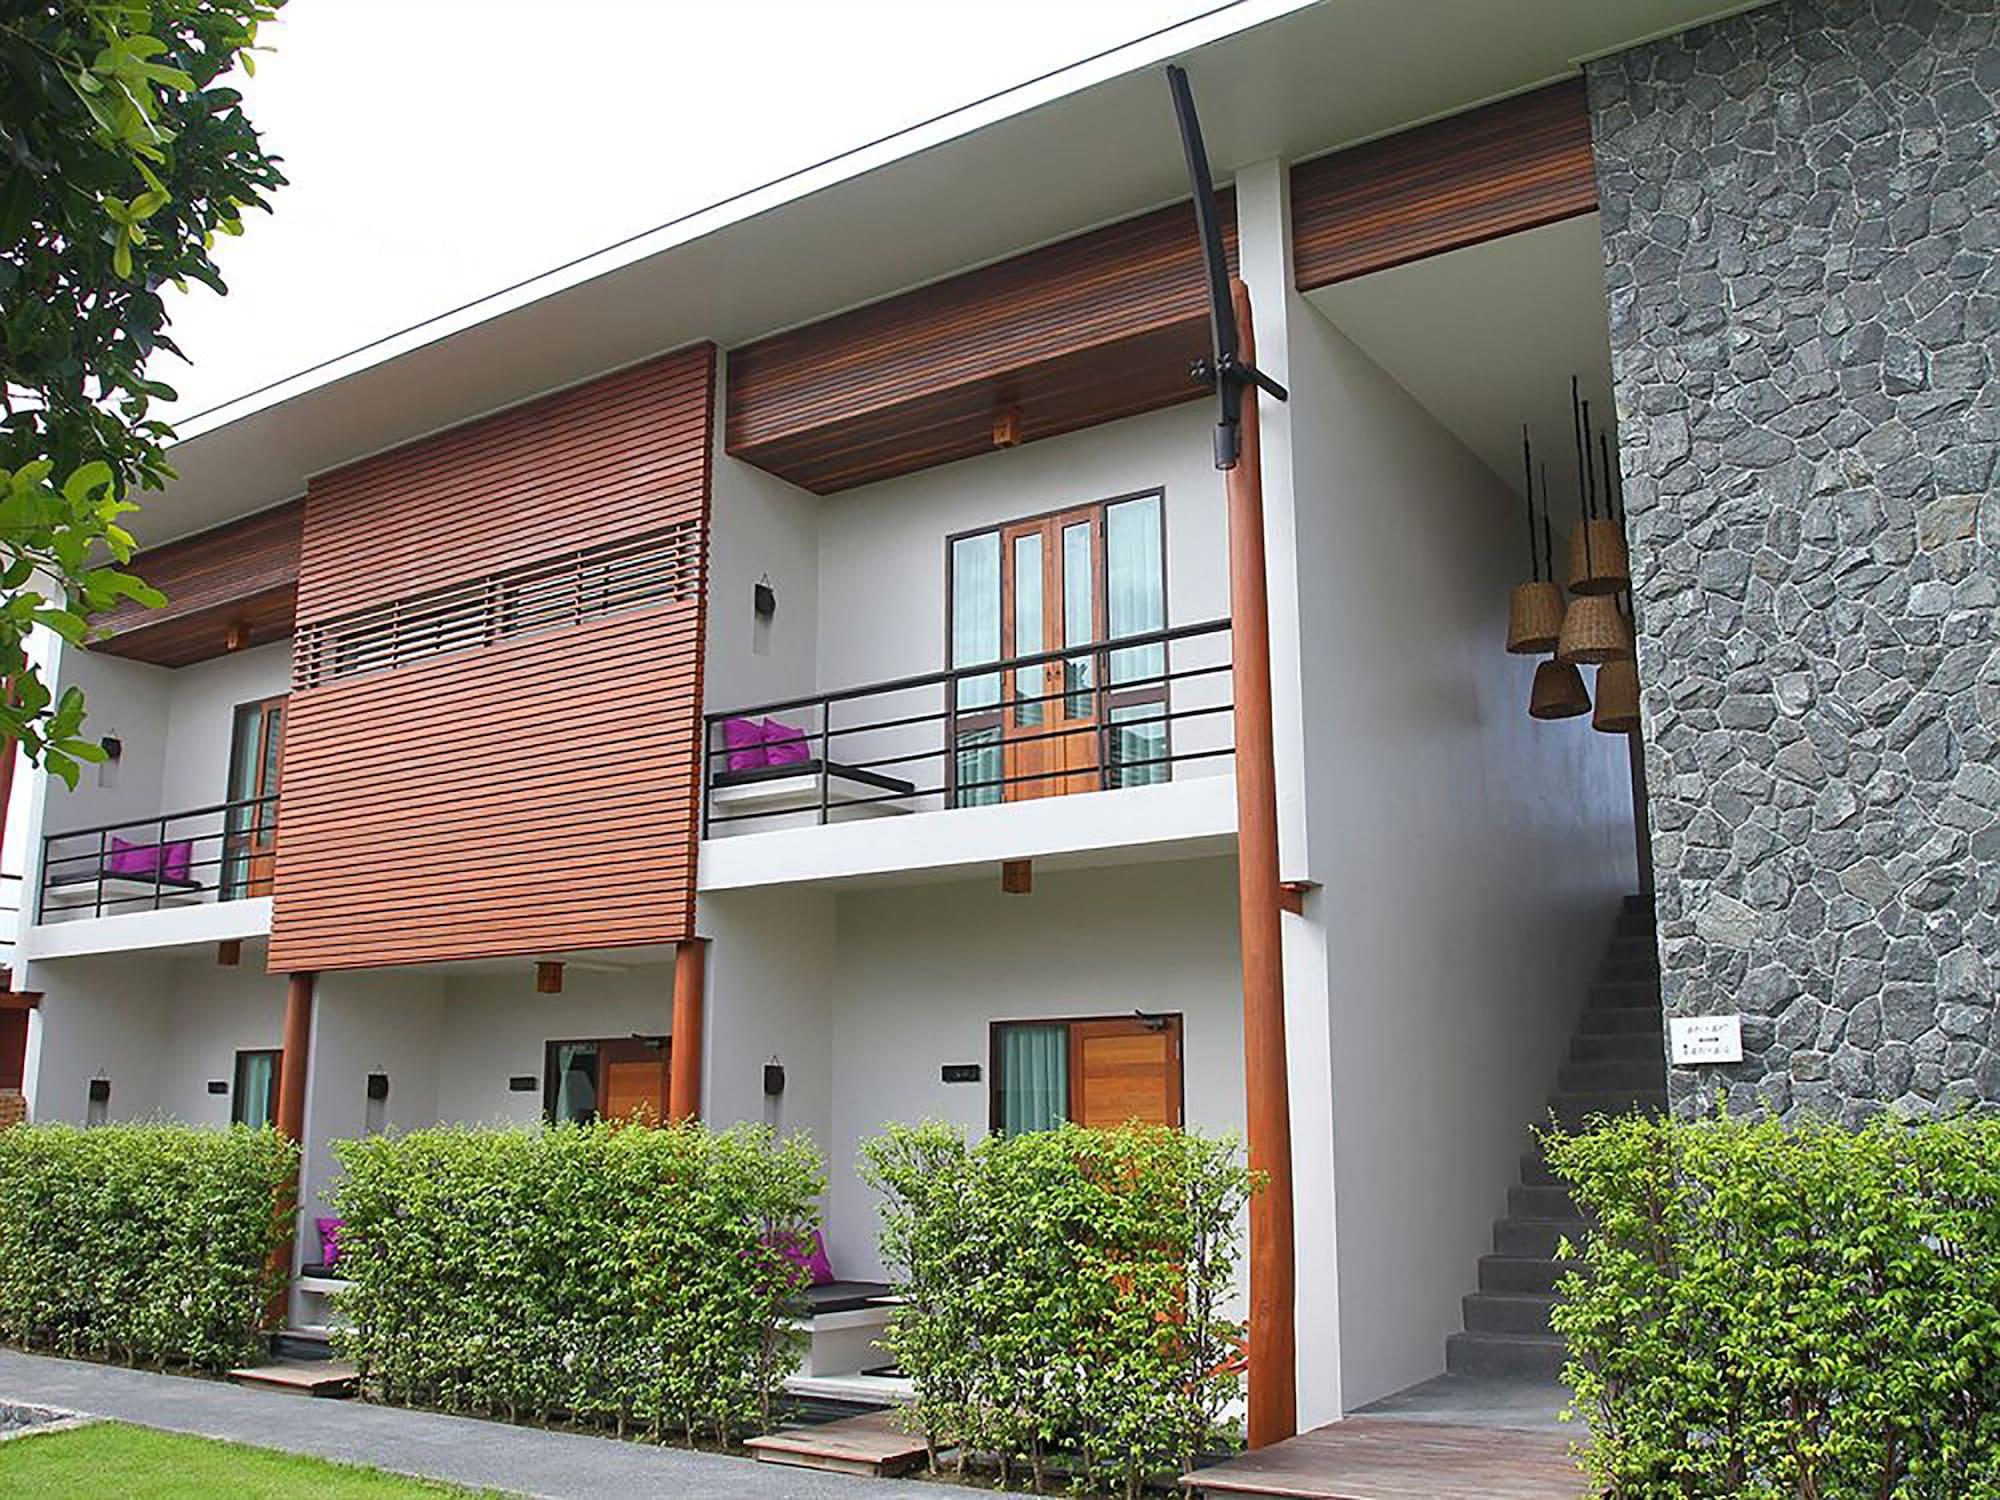 Villa Villa Pattaya Nong Prue Exterior photo